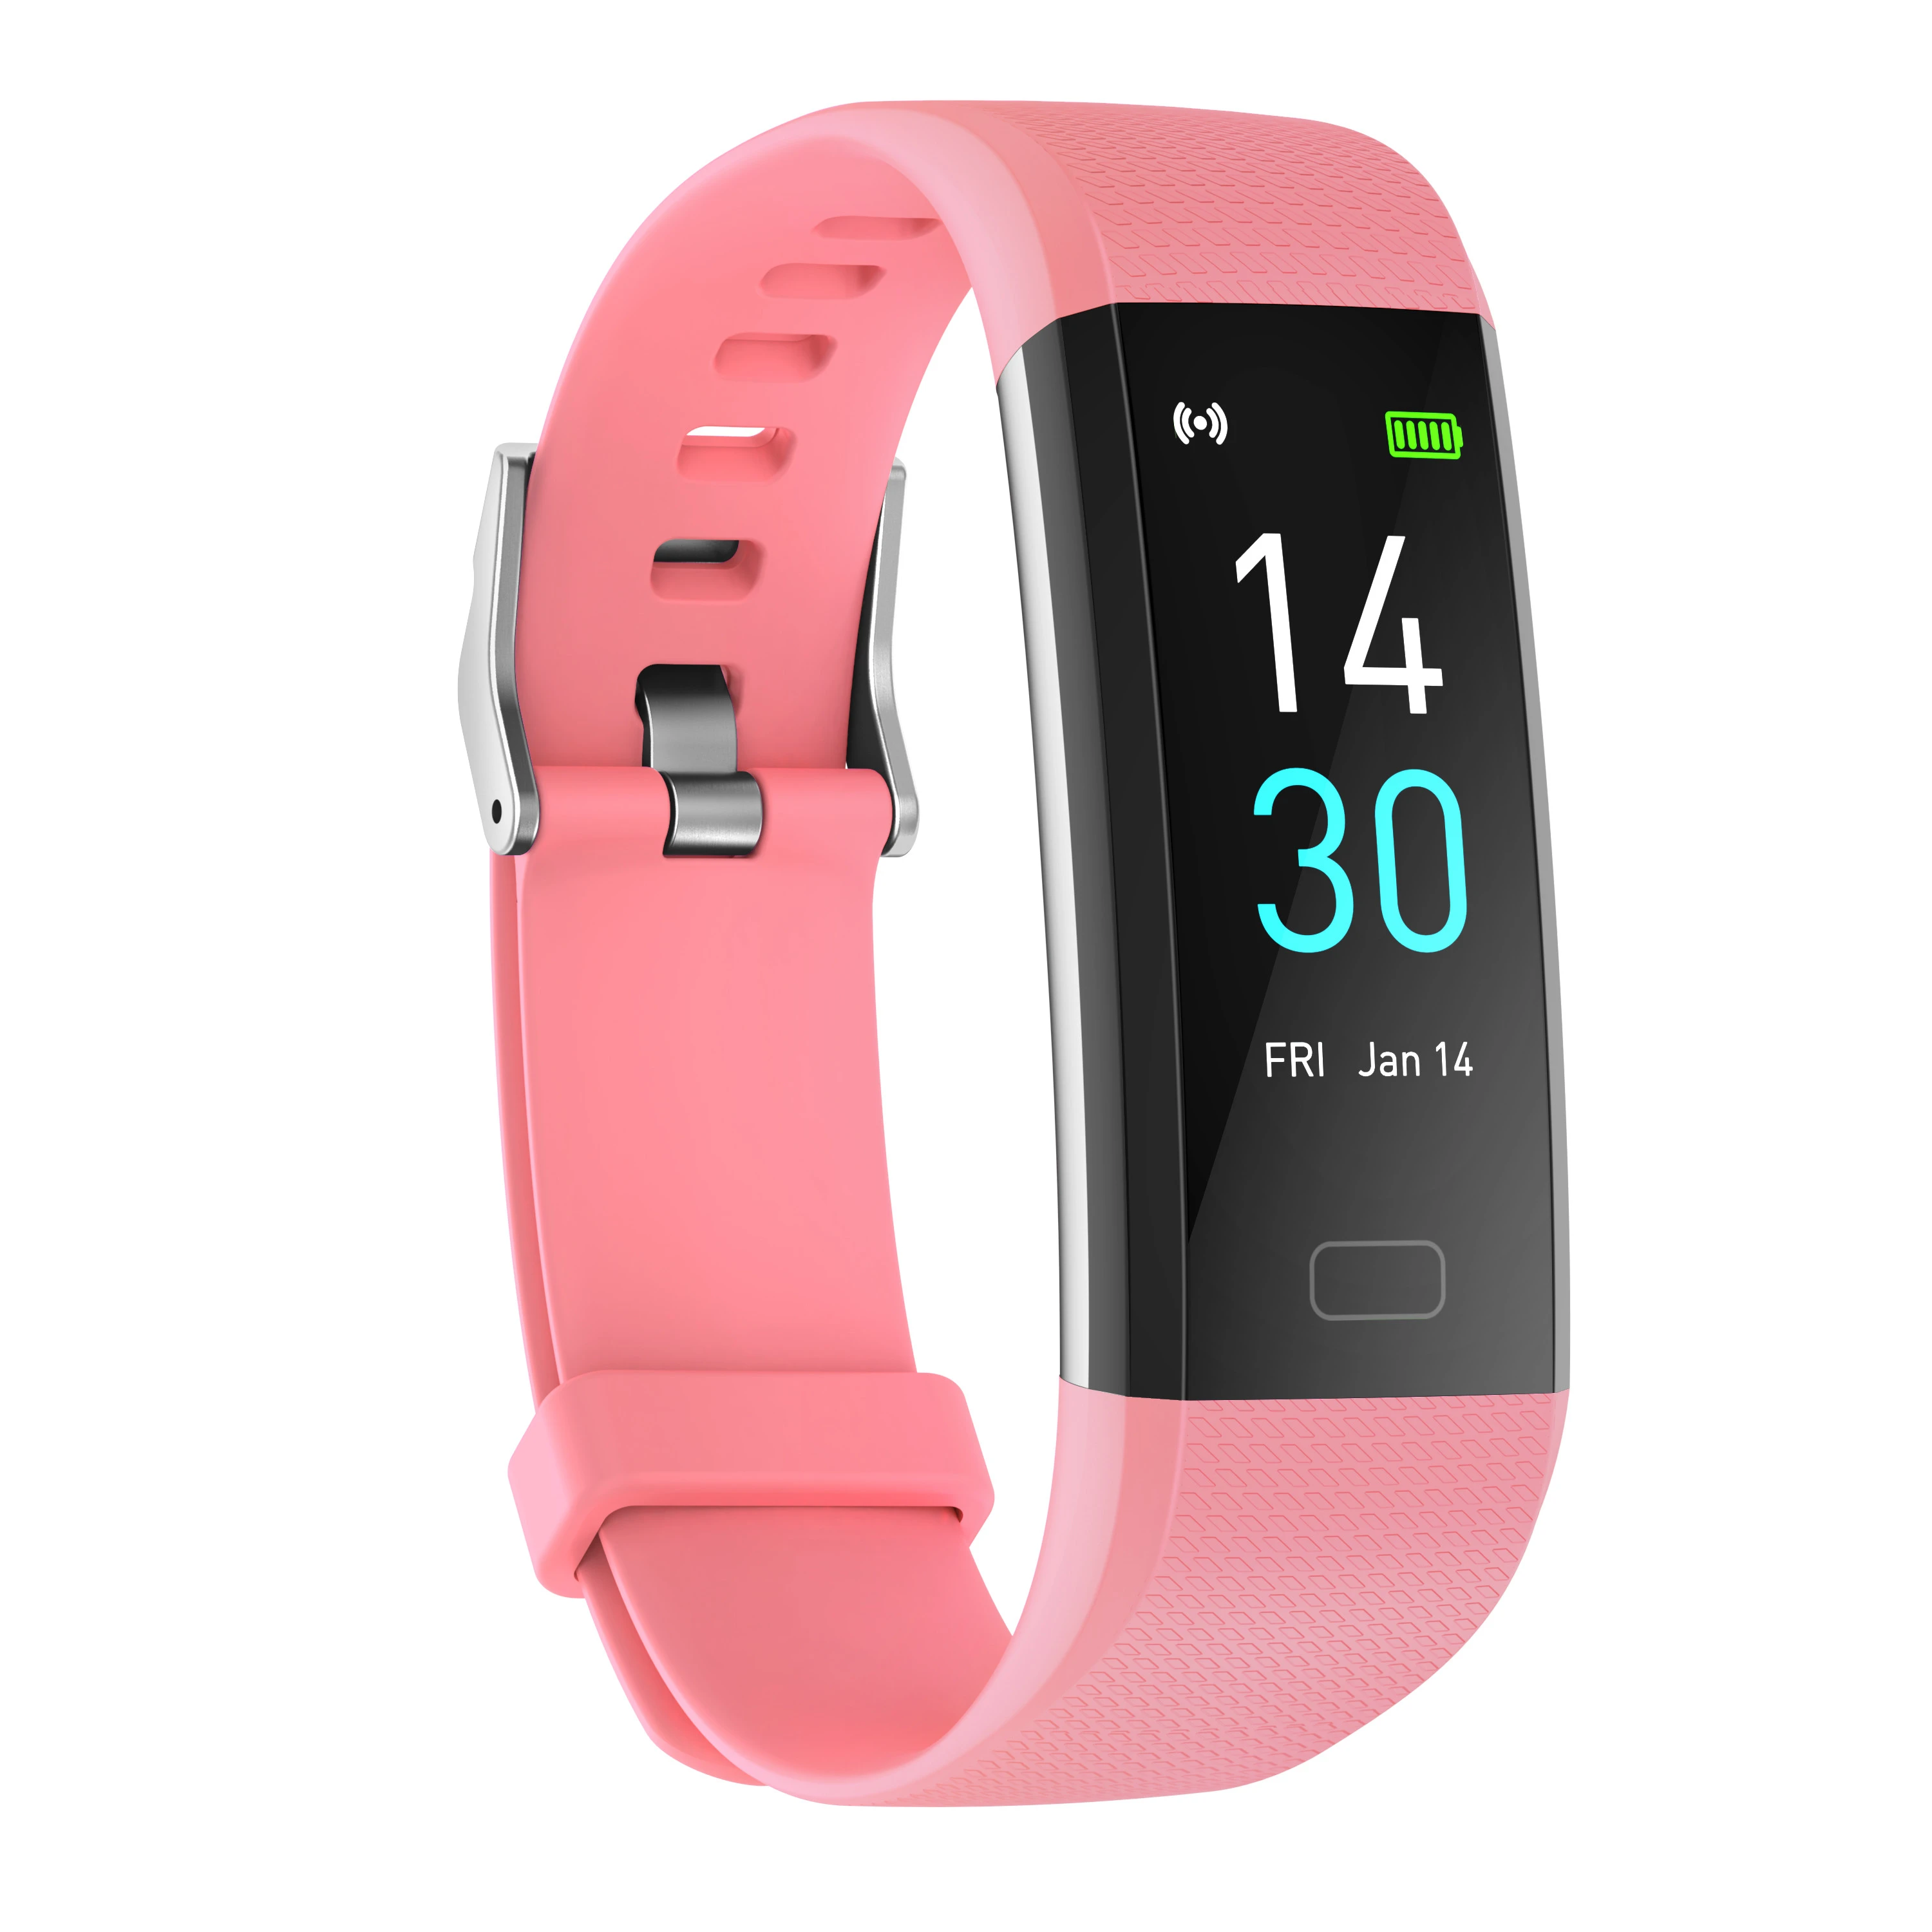 2020 new design sports bracelet smart watch smart wristband smart bracelet activity tracker with heart rate function